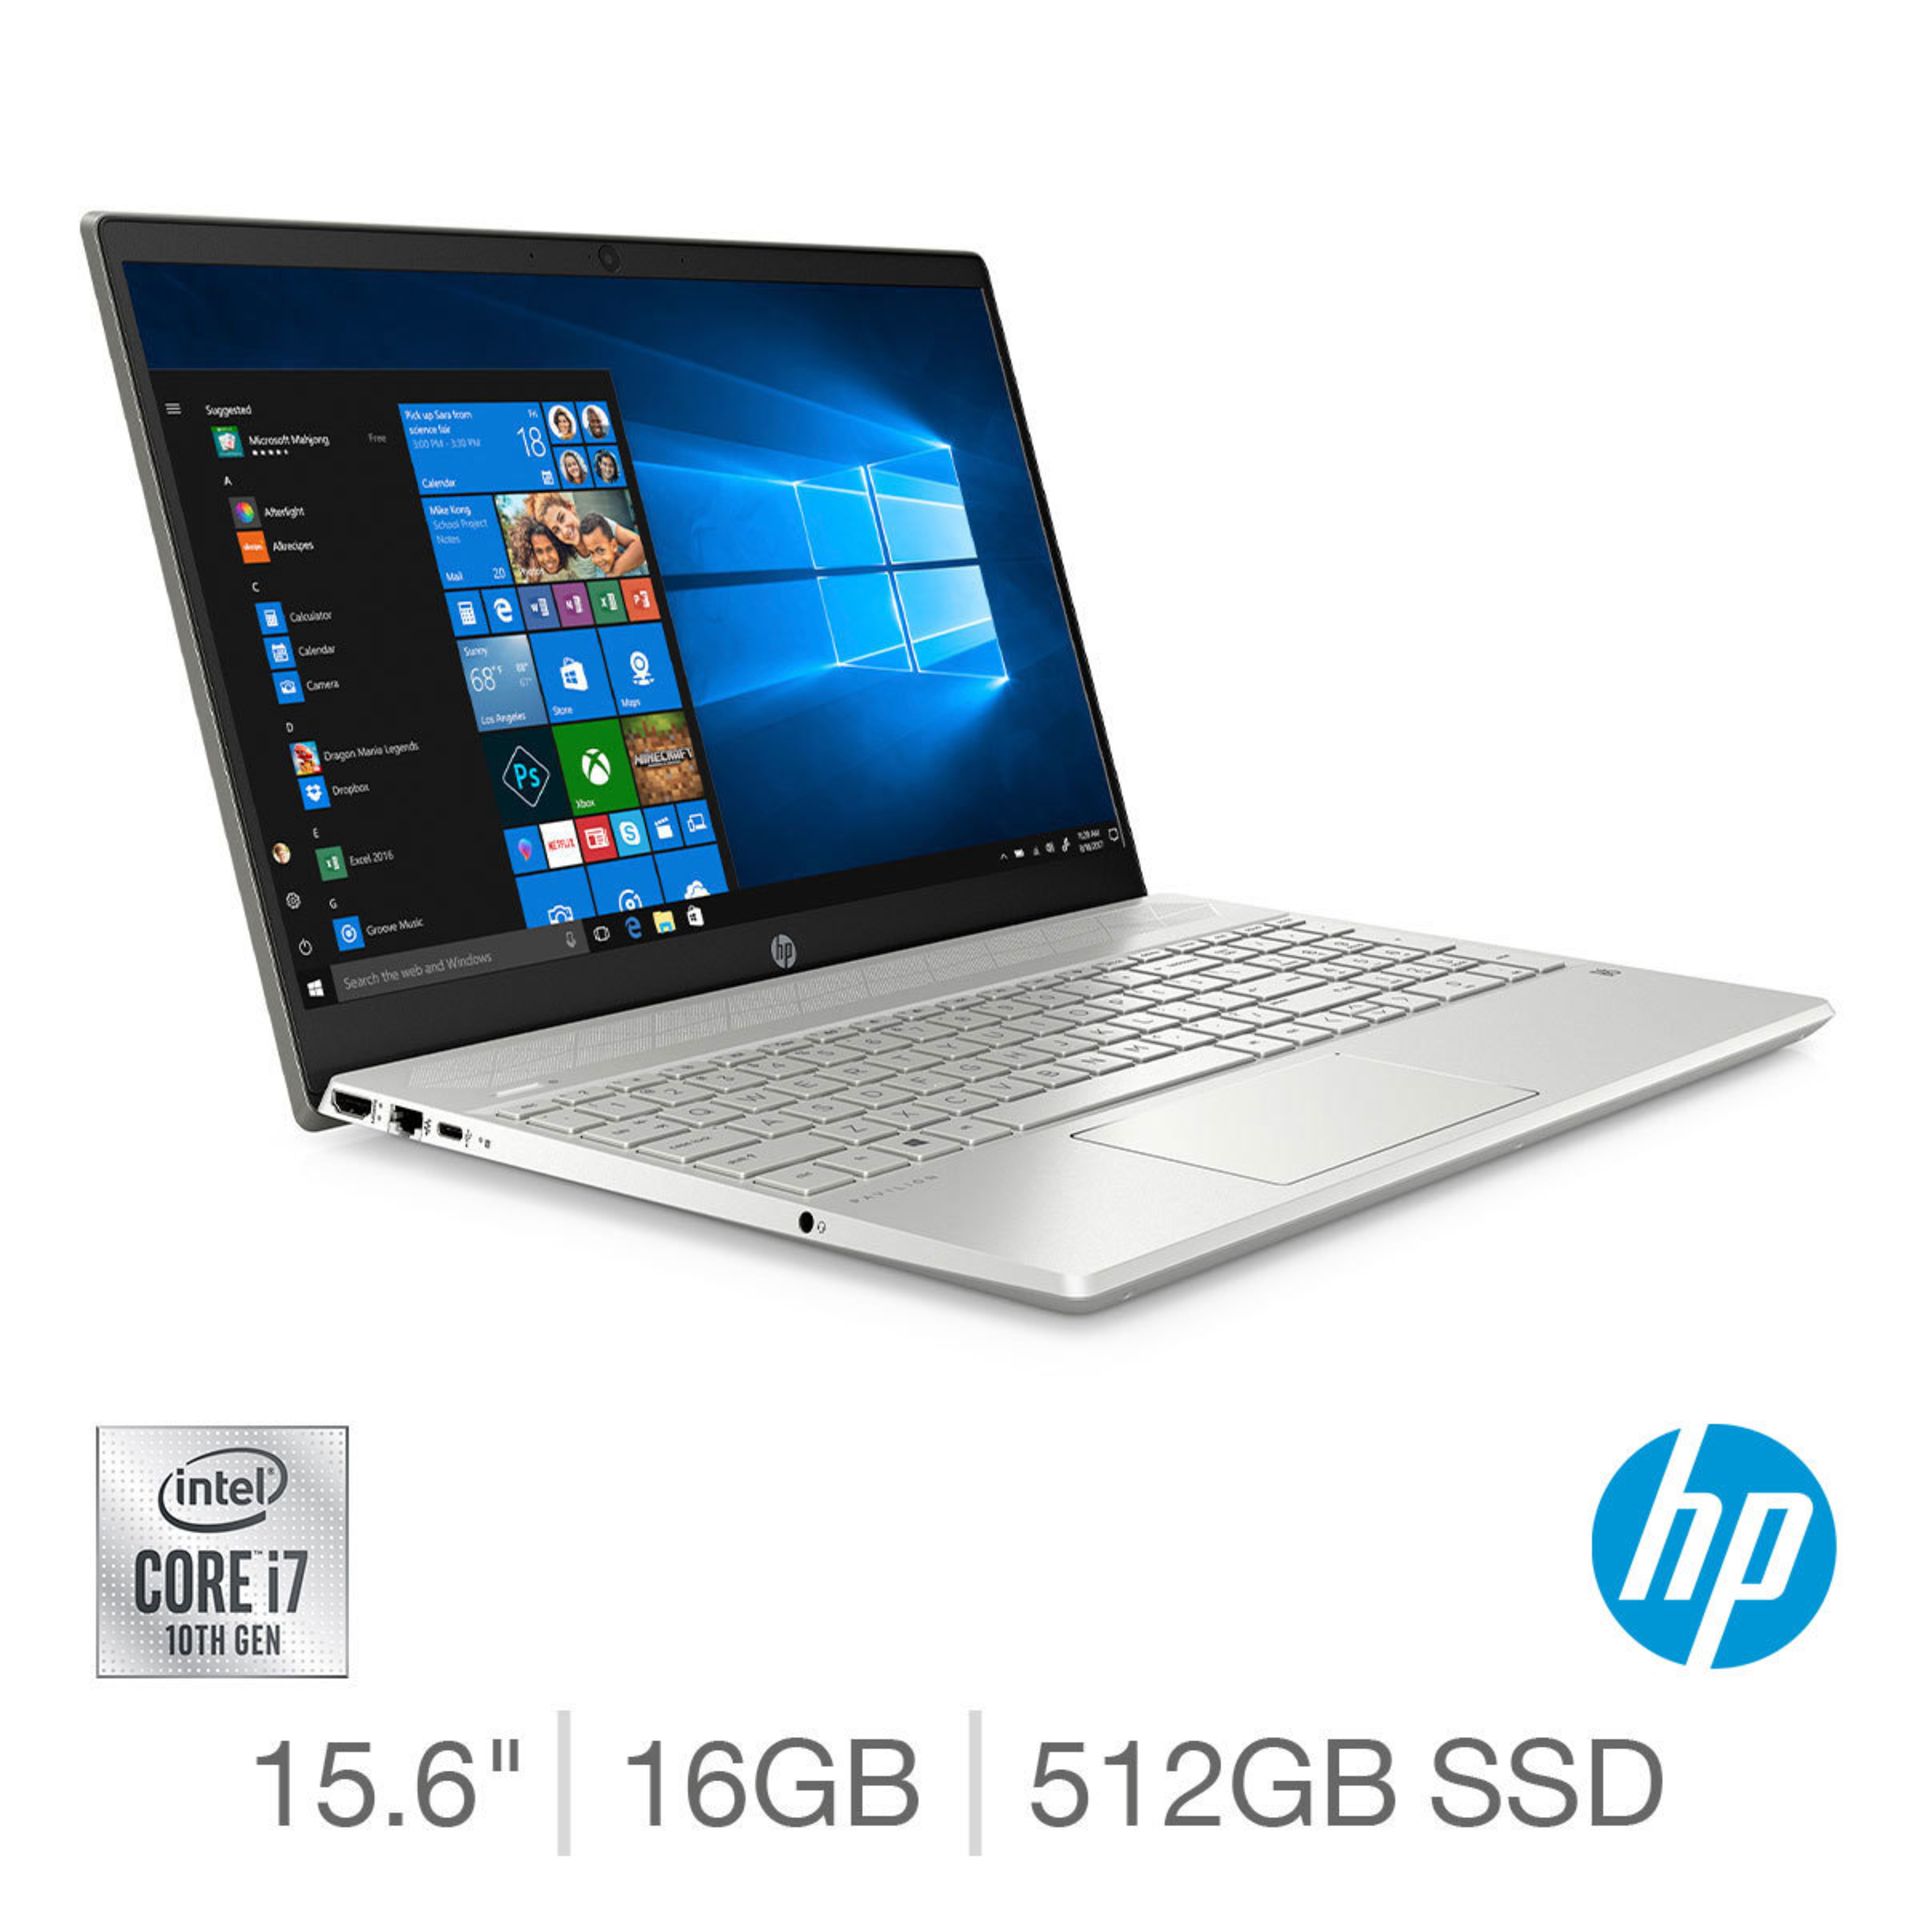 1 BOXED HP PAVILION 15-CS3013NA 15.6" FULL HD IPS LED NOTEBOOK, INTEL CORE I7-1065G7, 512GB SSD,